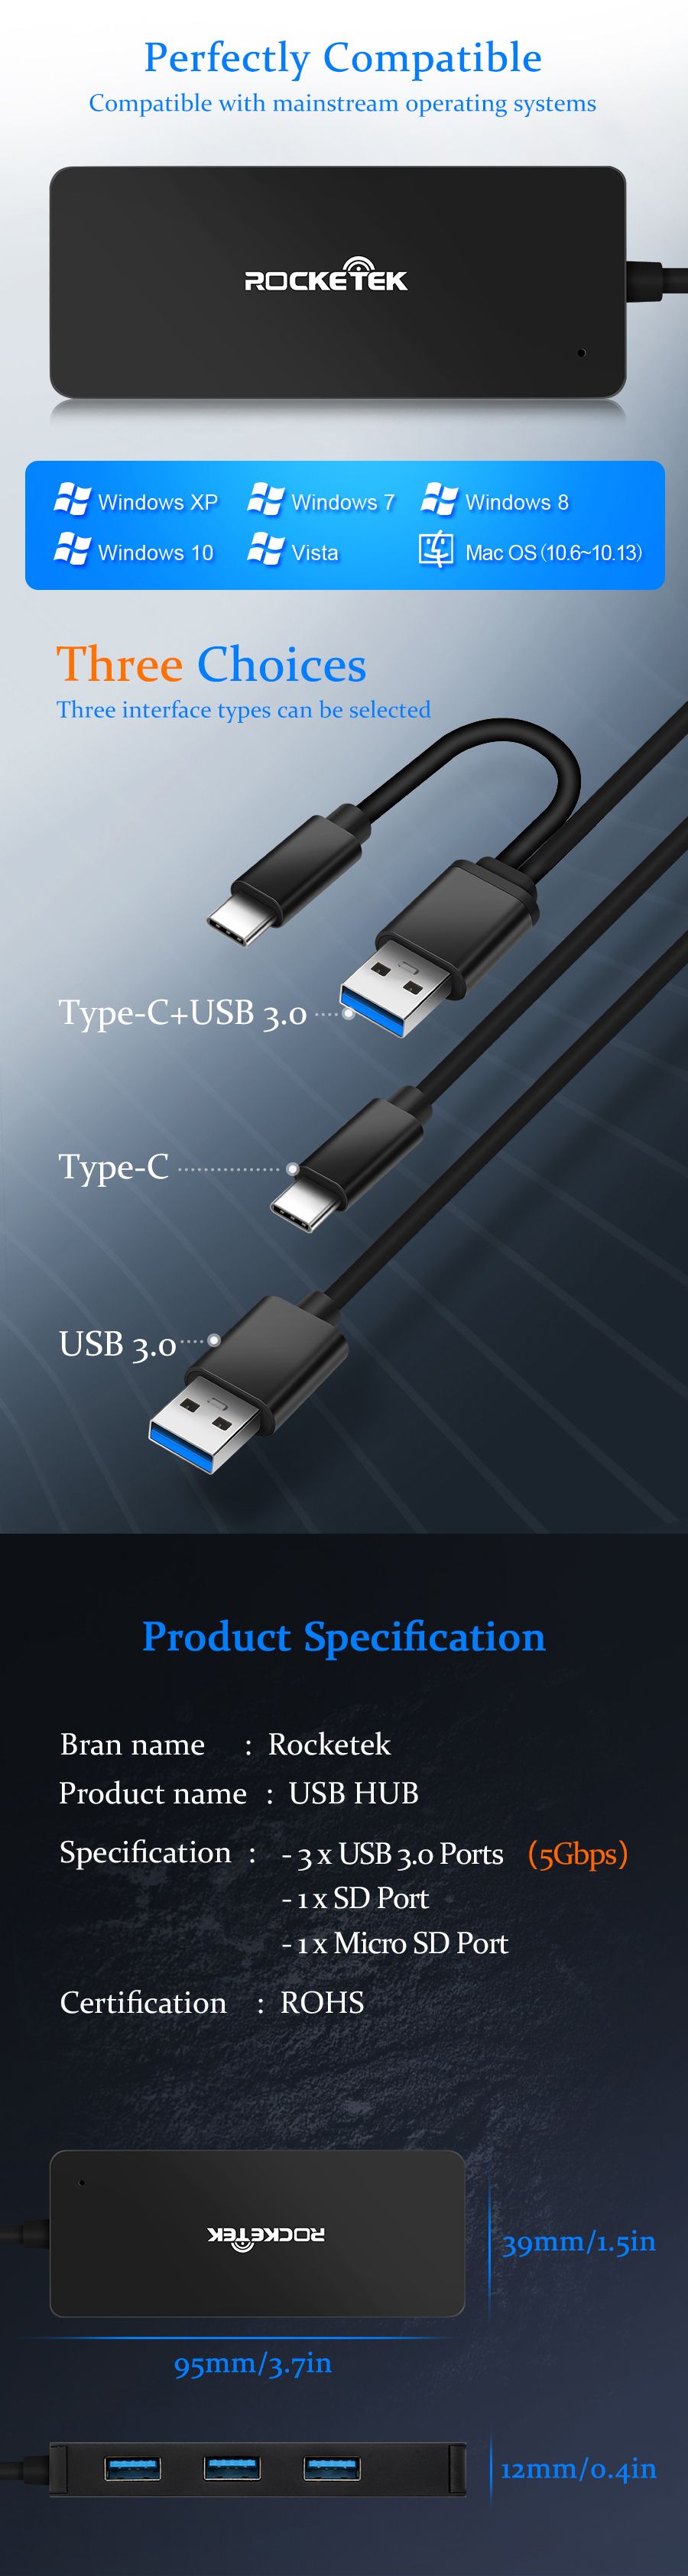 Rocketek-Multi-Interface-Hub-HUB-U-HUB-C-HUB-UC-USB-30-Type-C-Hub-4-Ports-Adapter-Splitter-Power-Int-1621340